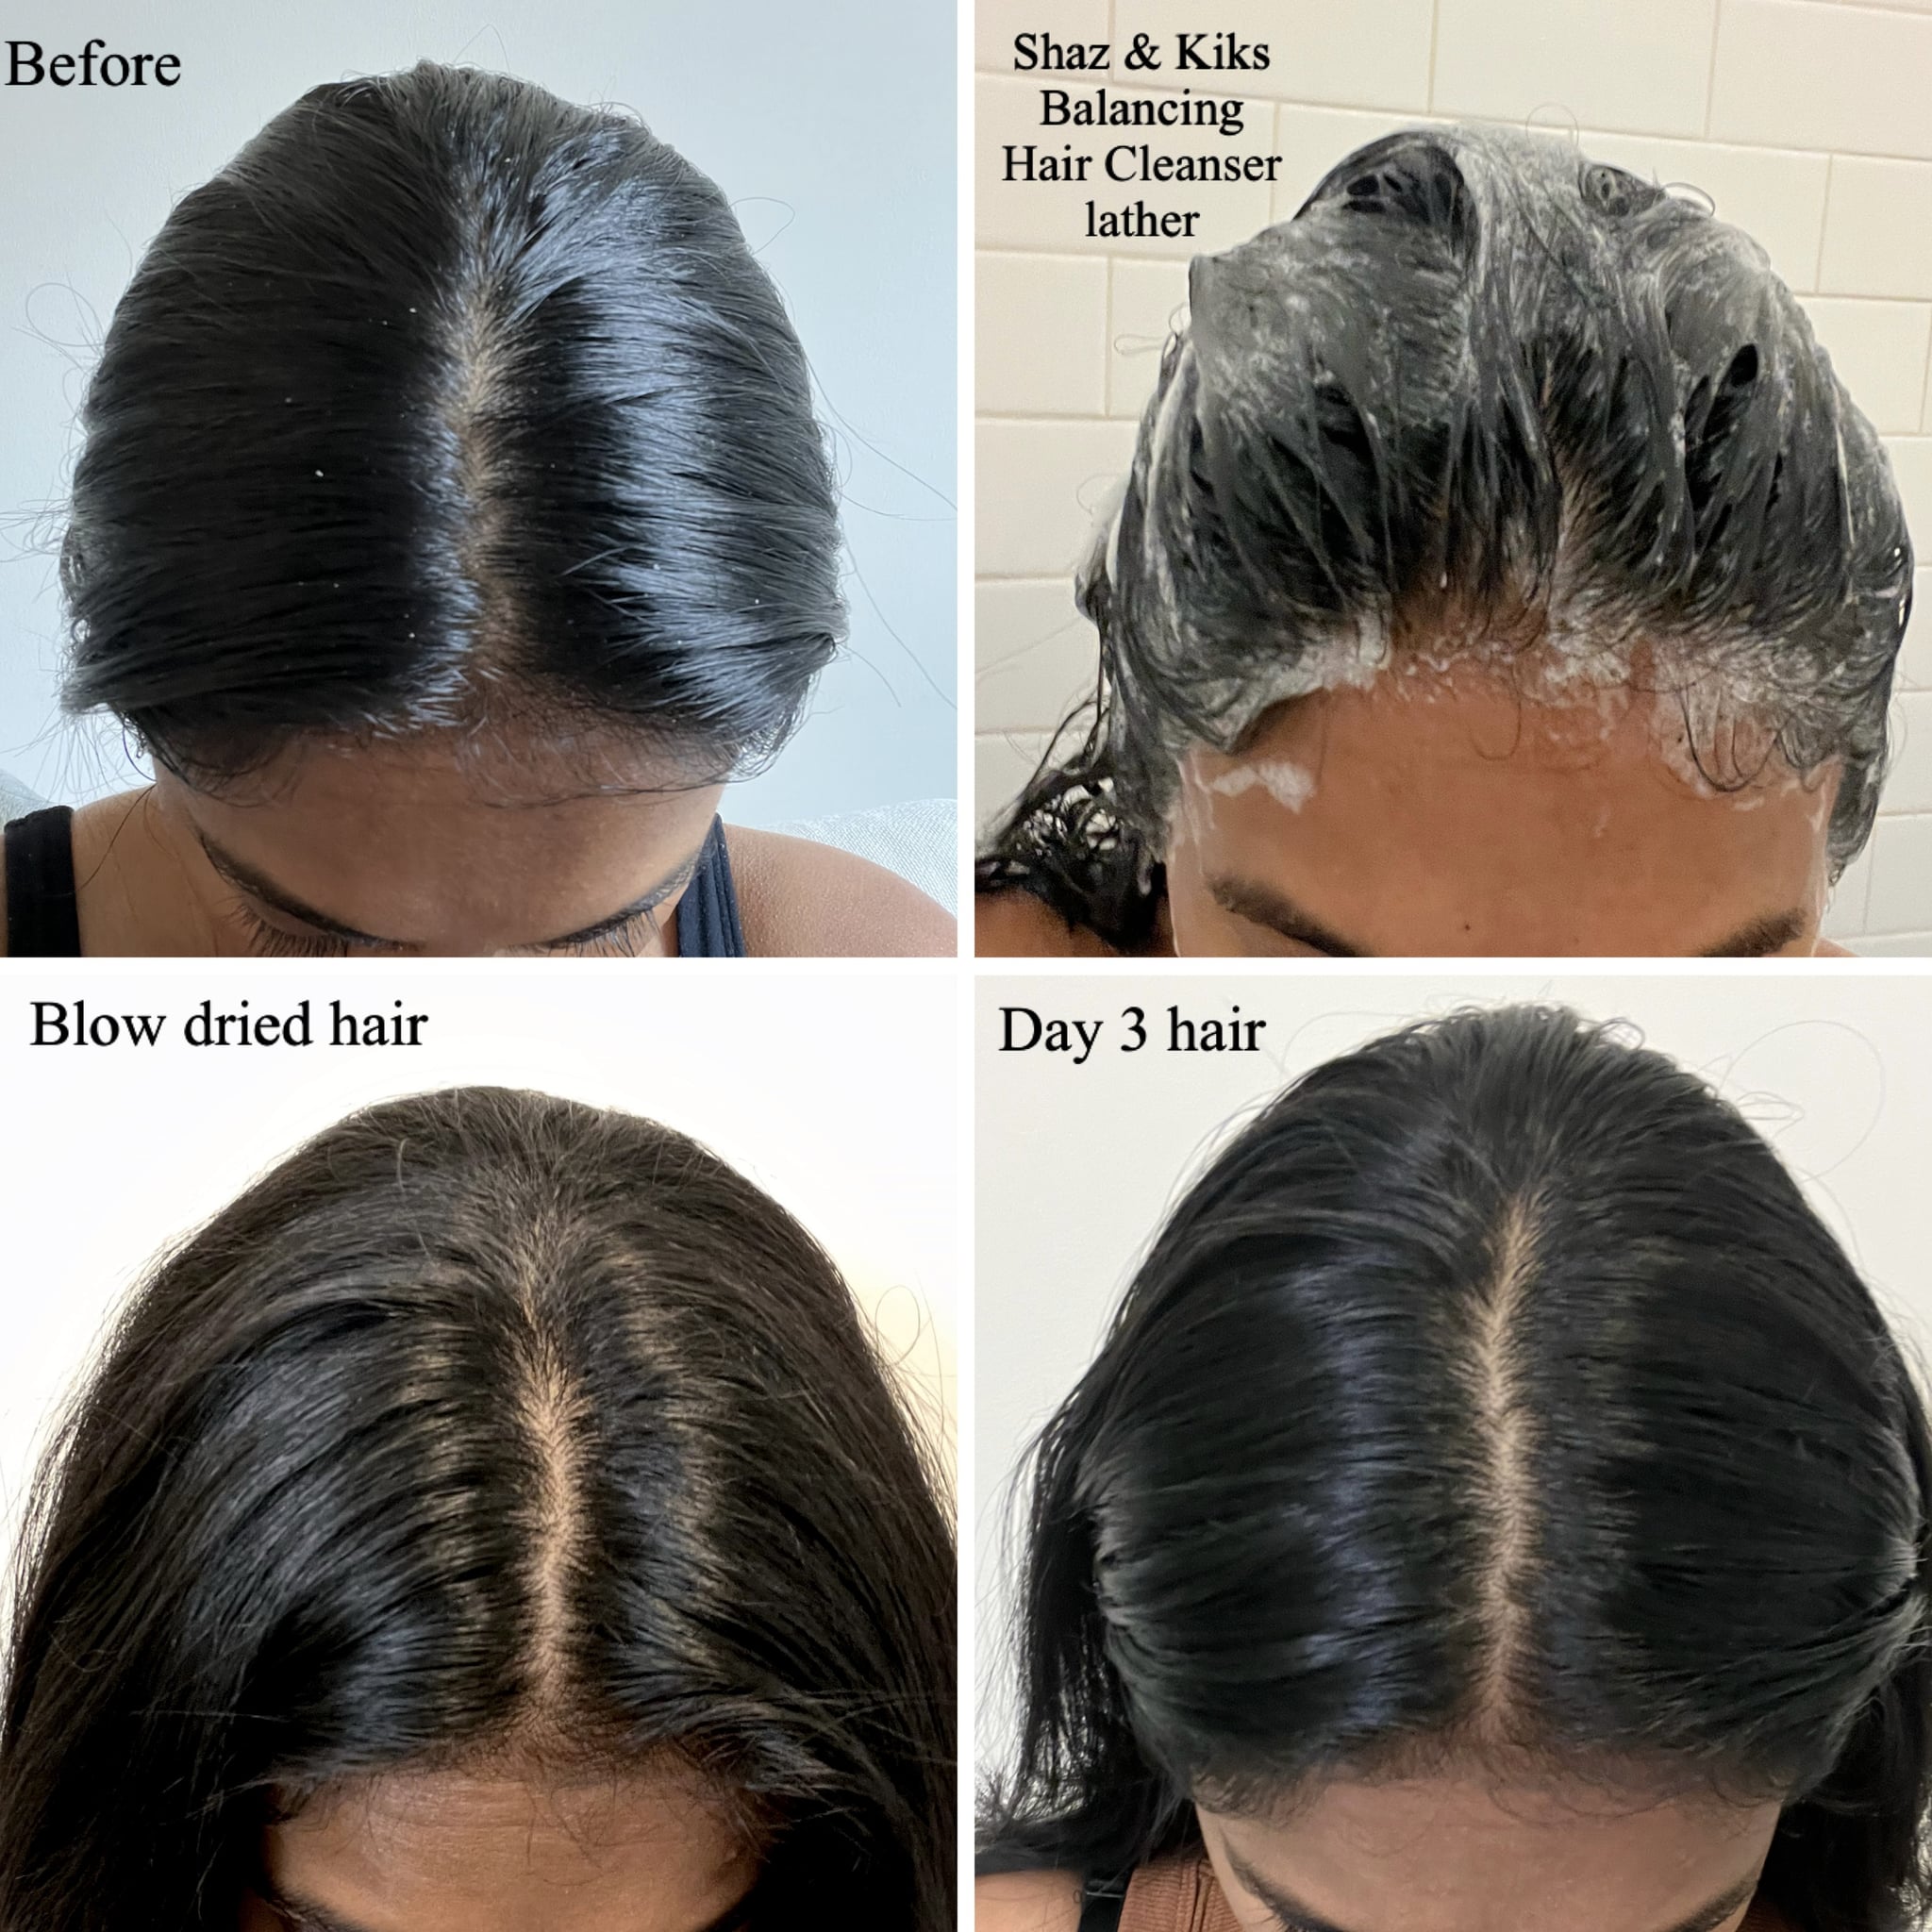 До, во время и после использования шампуня Shaz & Kiks Unearth Yourself Balancing Clay Hair Cleanser Shampoo.